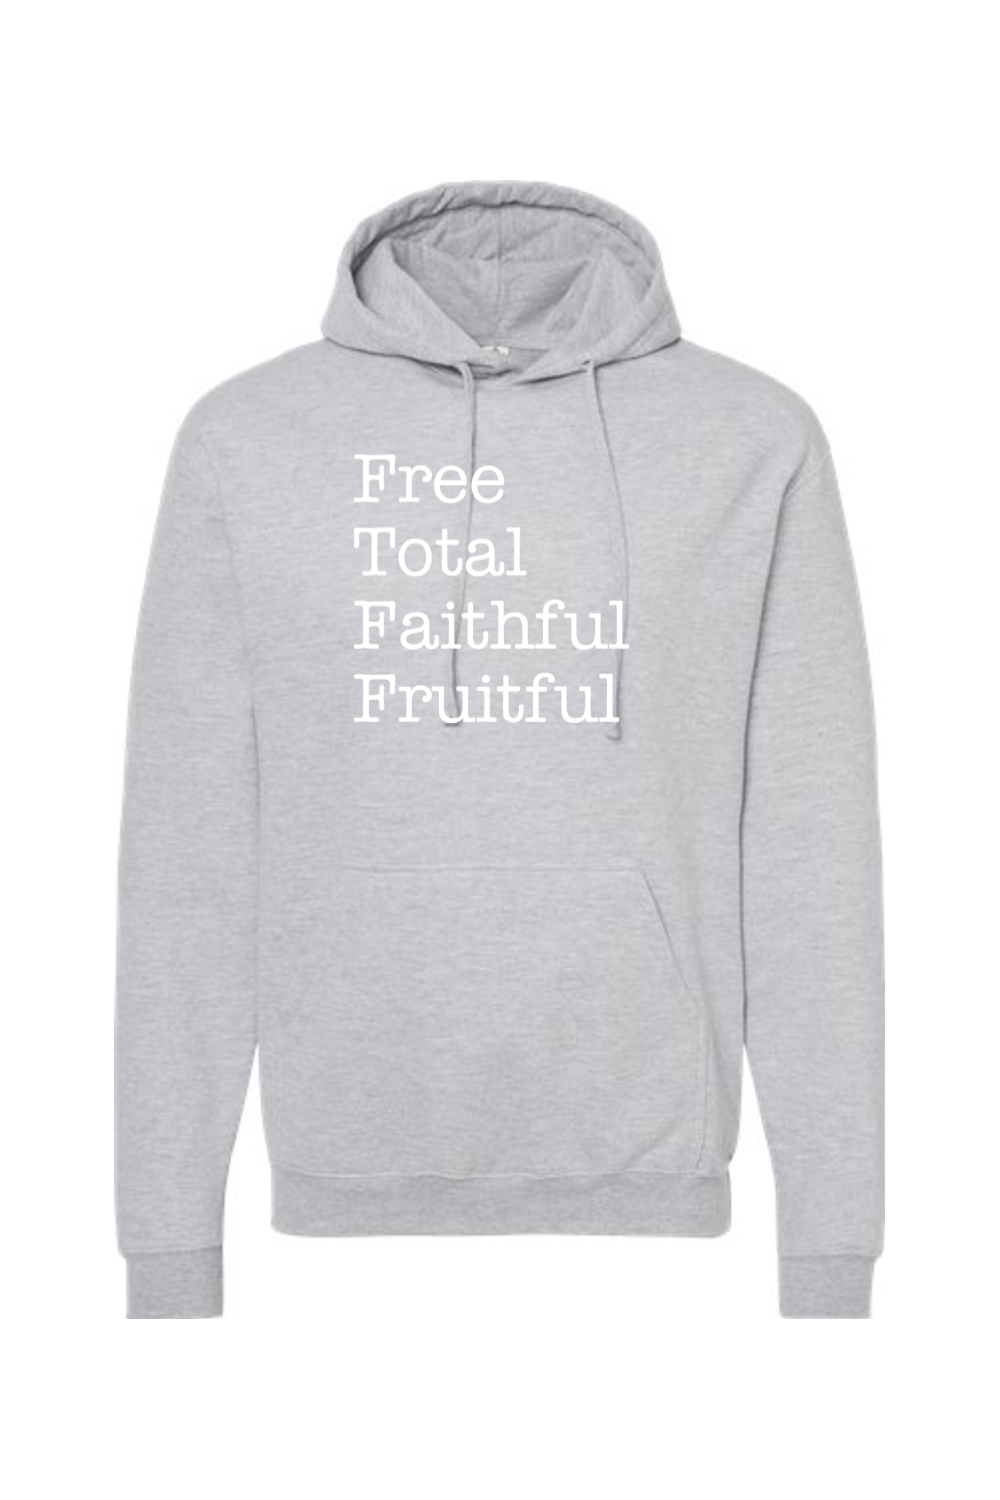 Free Total Faithful Fruitful - Theology of the Body Hoodie Sweatshirt